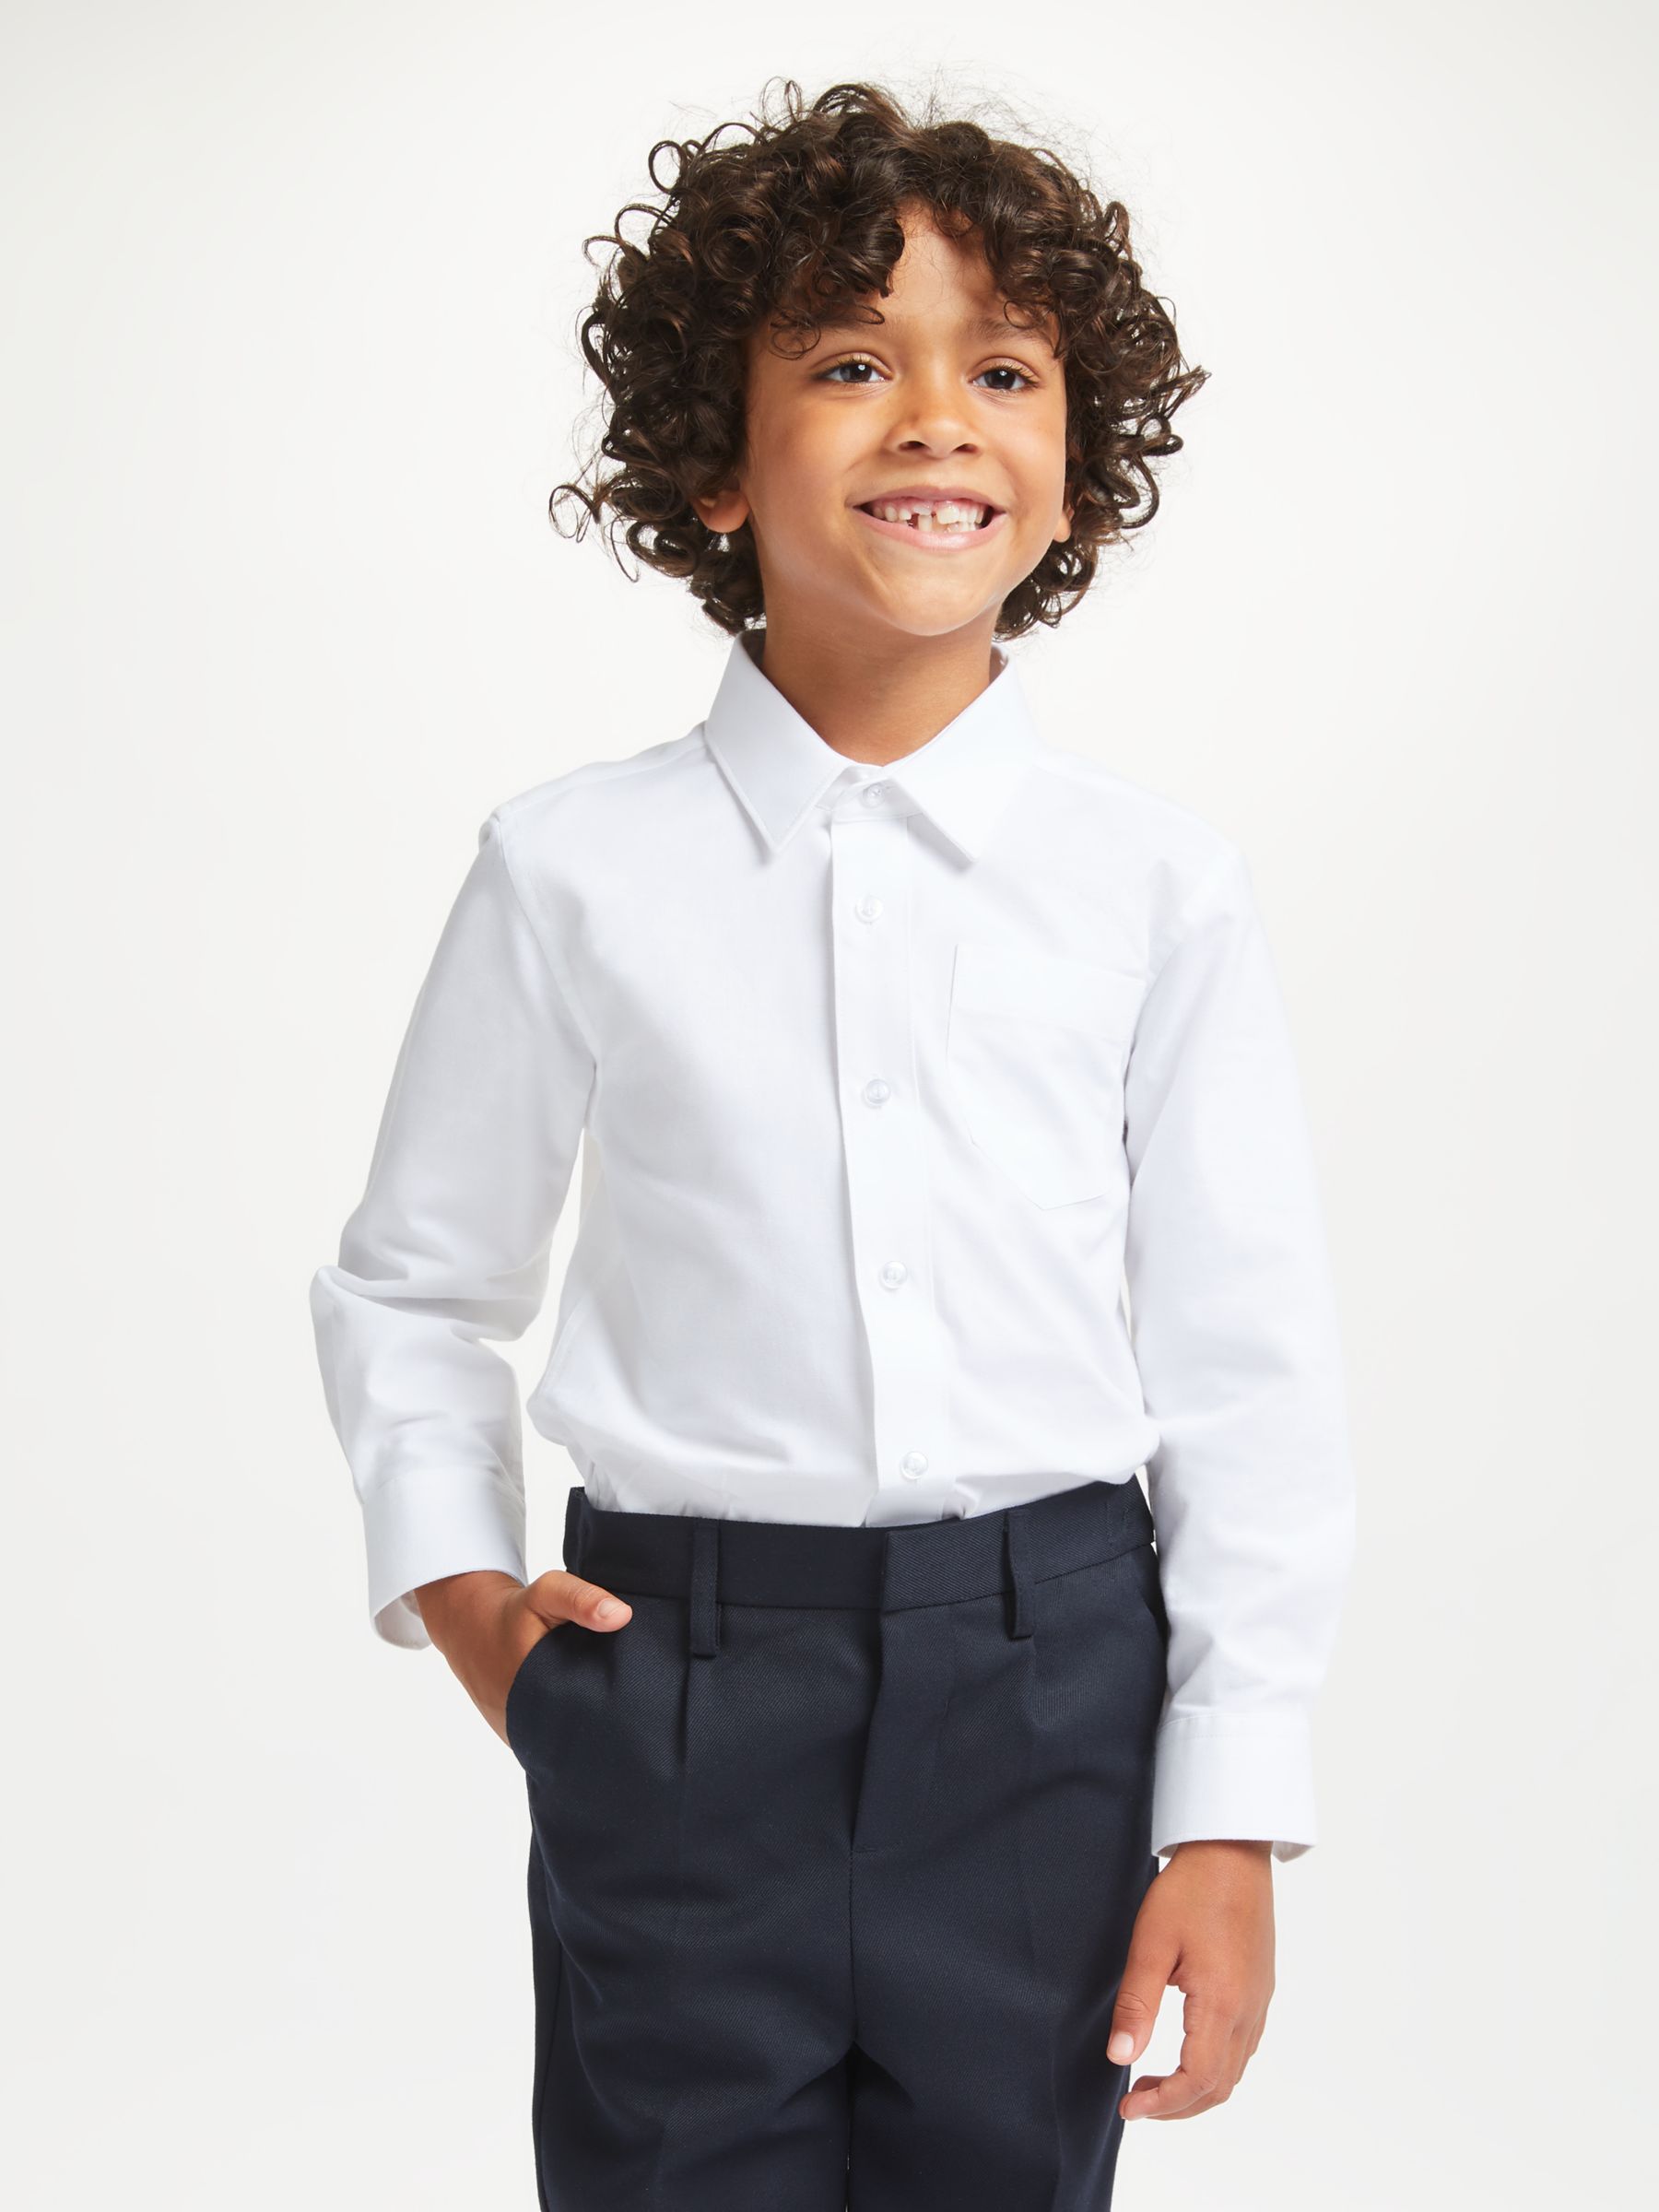 John Lewis Boys' GOTS Organic Cotton Long Sleeve School Shirt, Pack of 2, White, 3 years